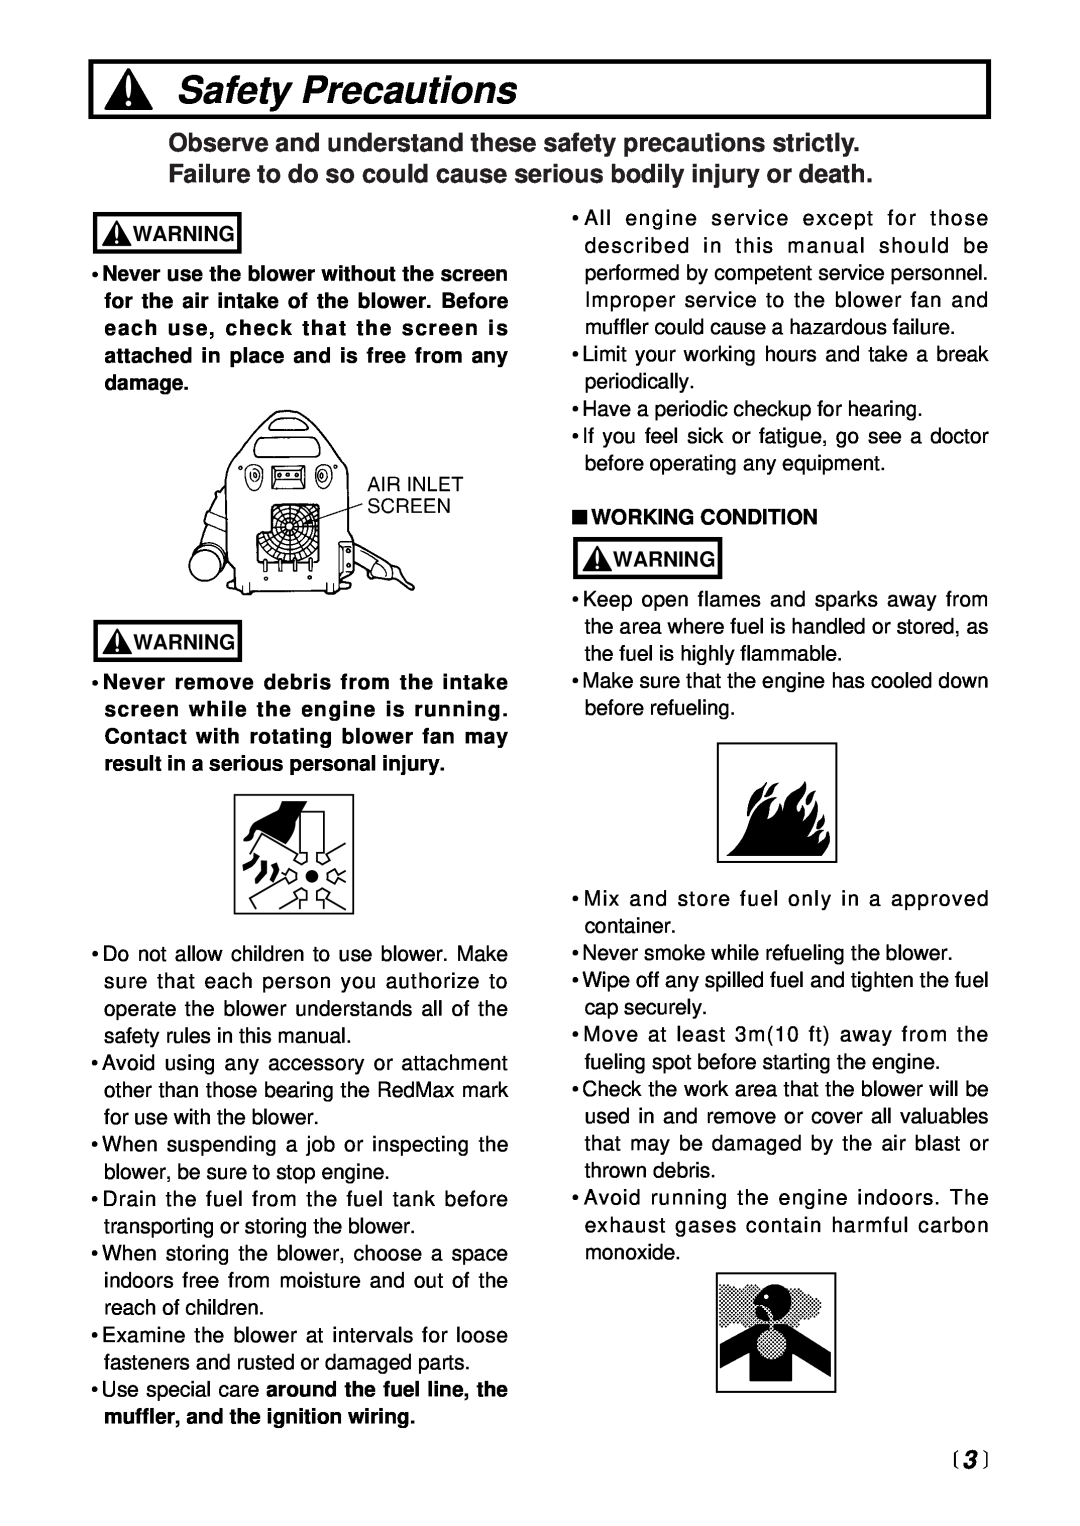 RedMax EB6200 manual Safety Precautions, 3  